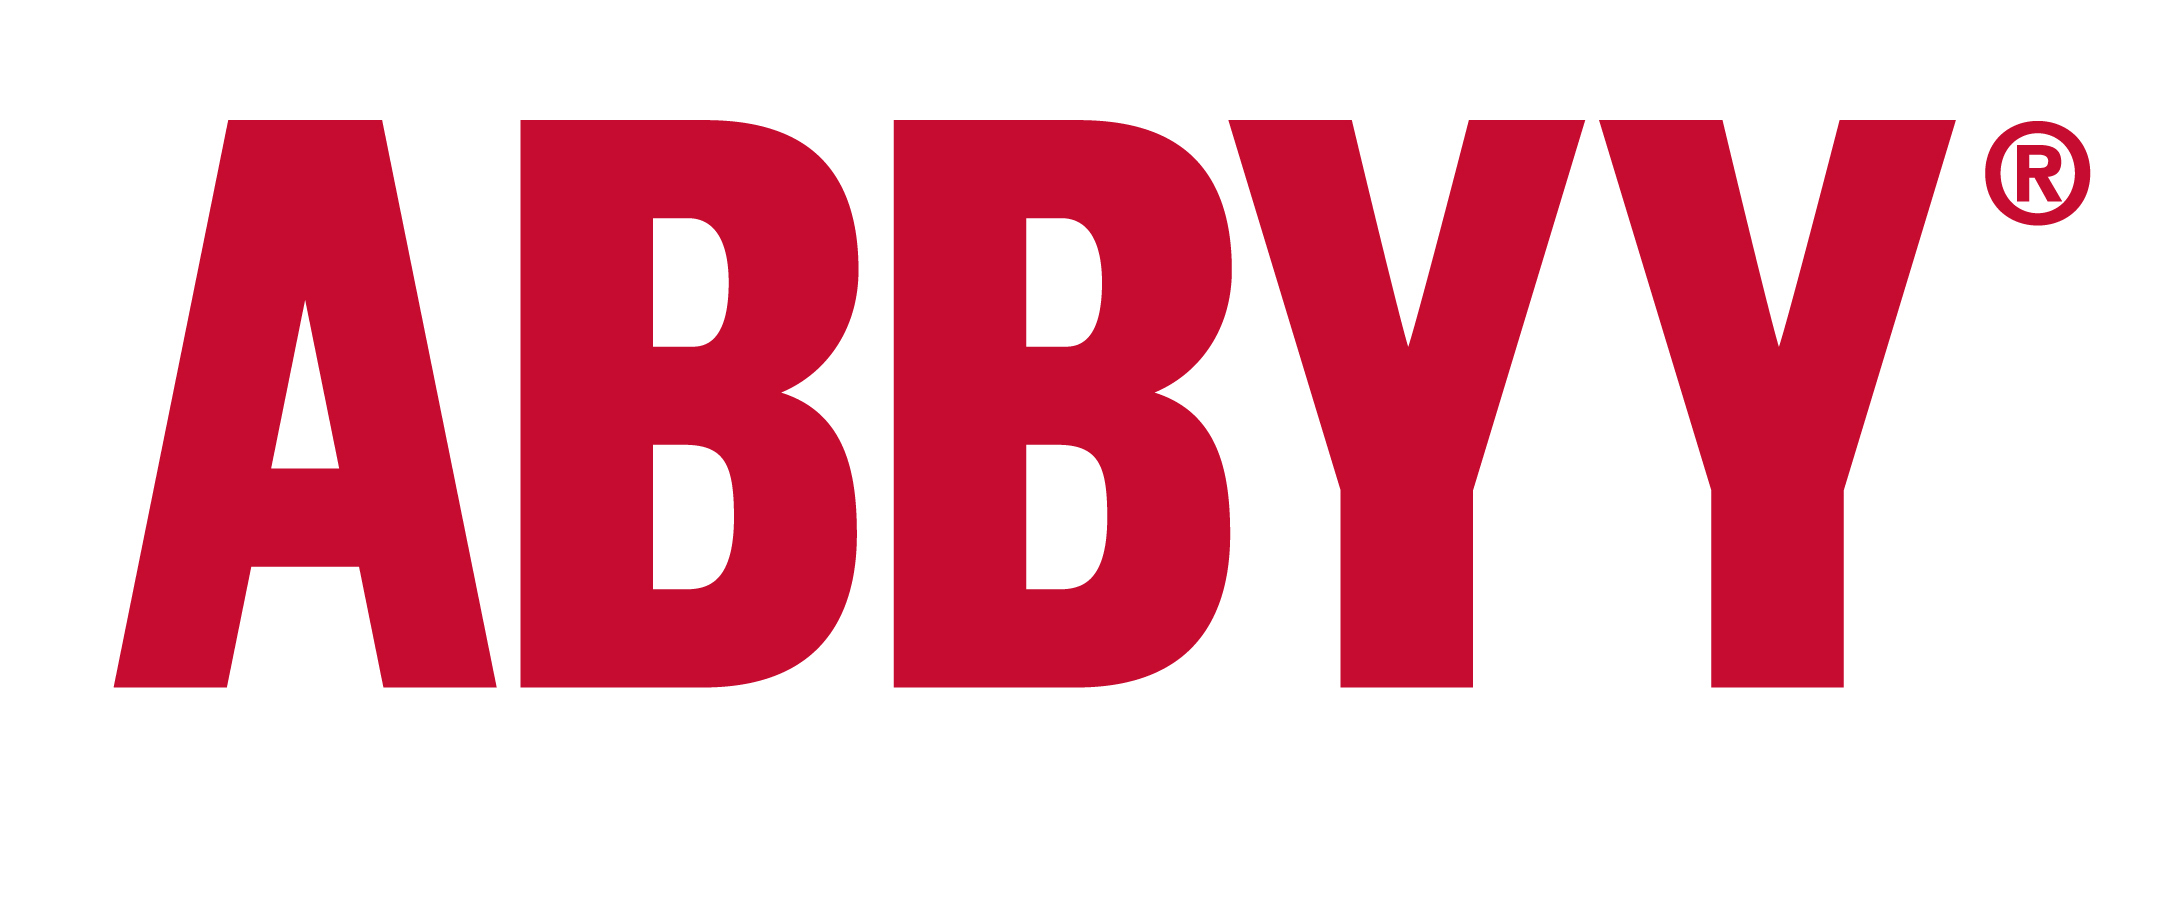 ABBYY logo